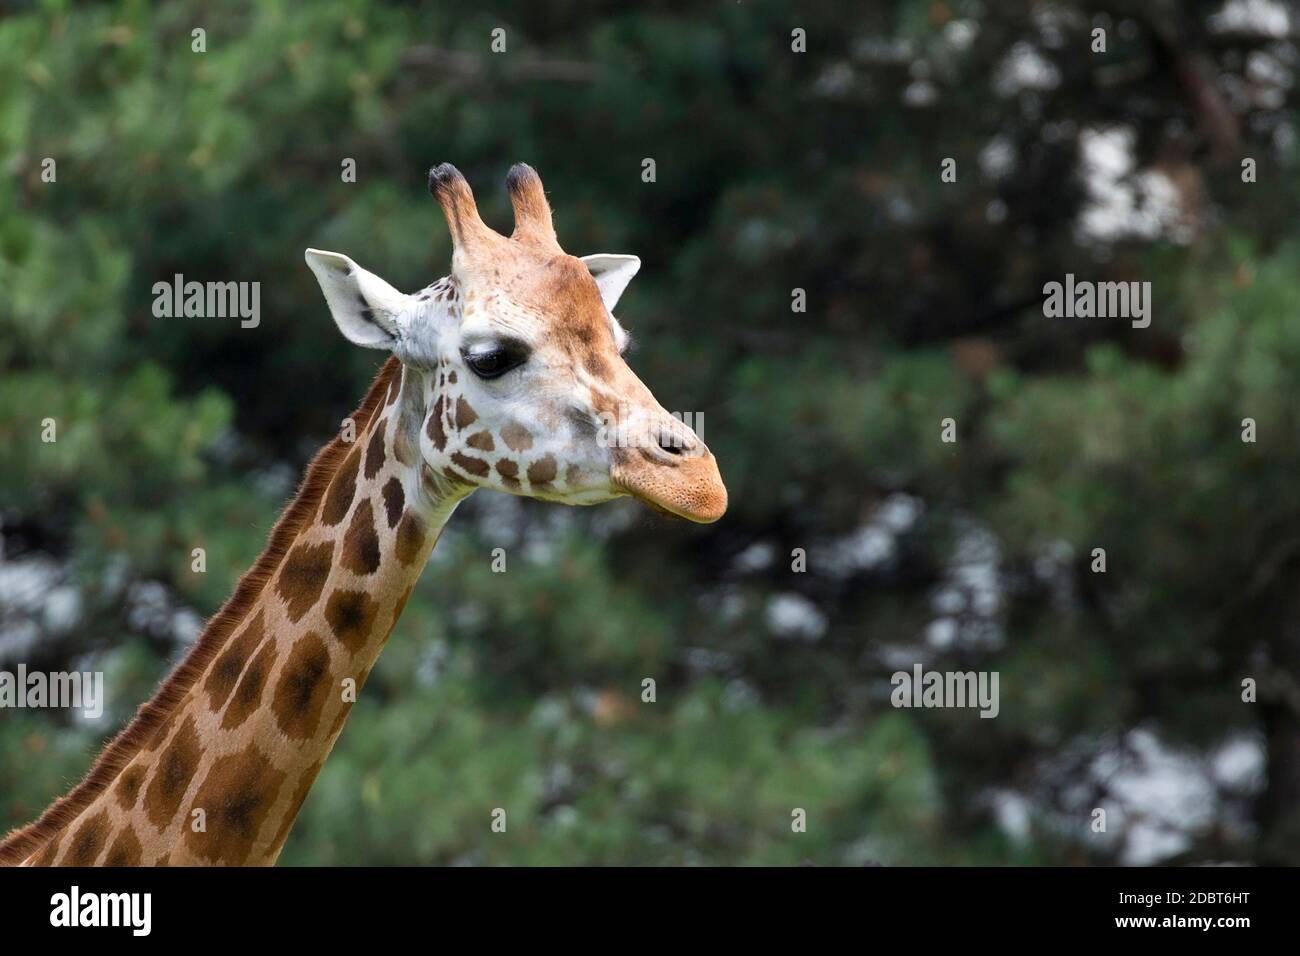 Giraffe a portrait Stock Photo